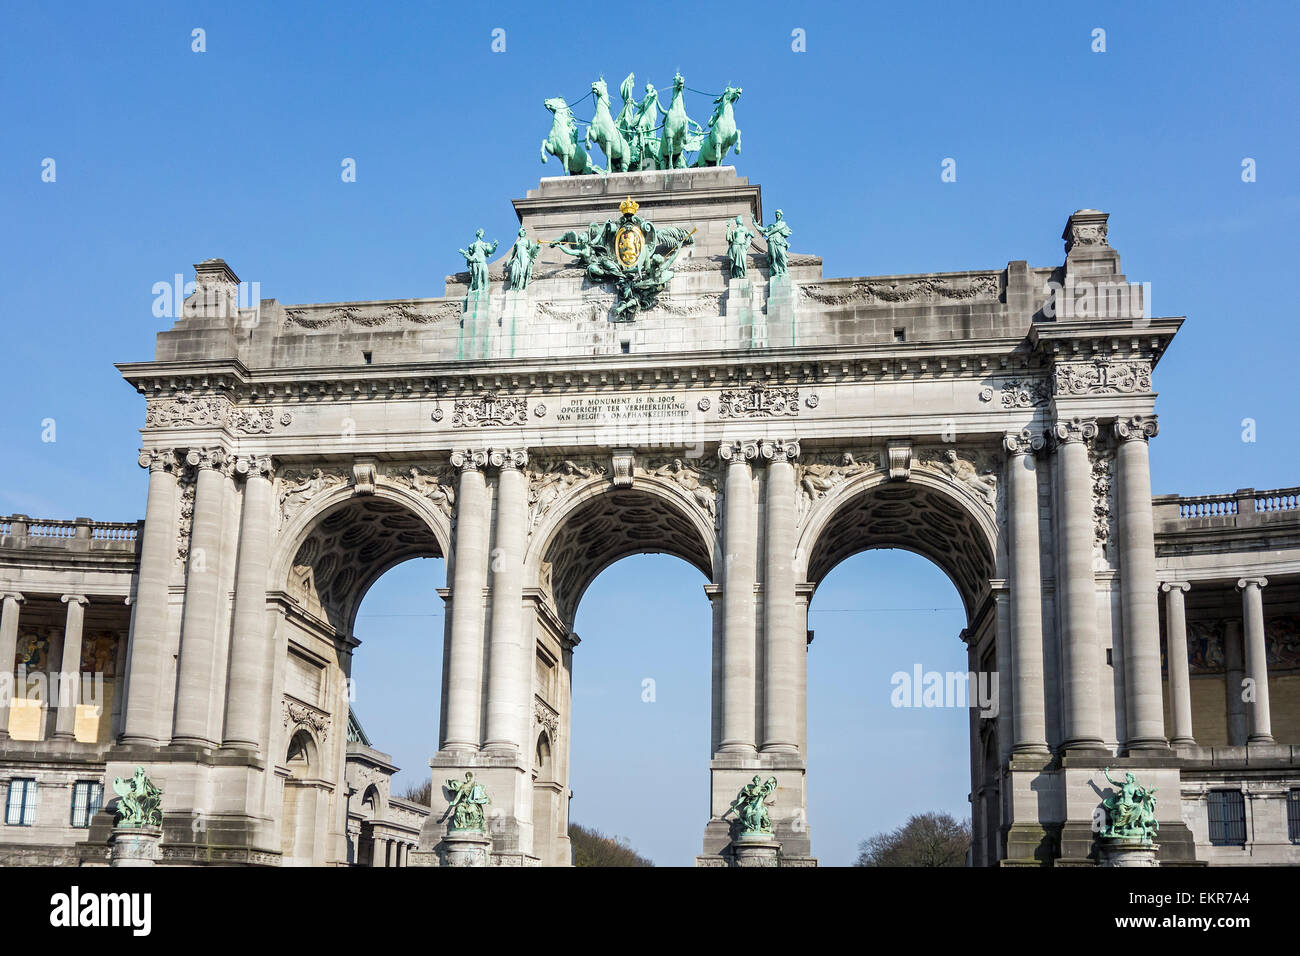 Triumphal arch at the Parc du Cinquantenaire / Jubelpark in Brussels, Belgium Stock Photo